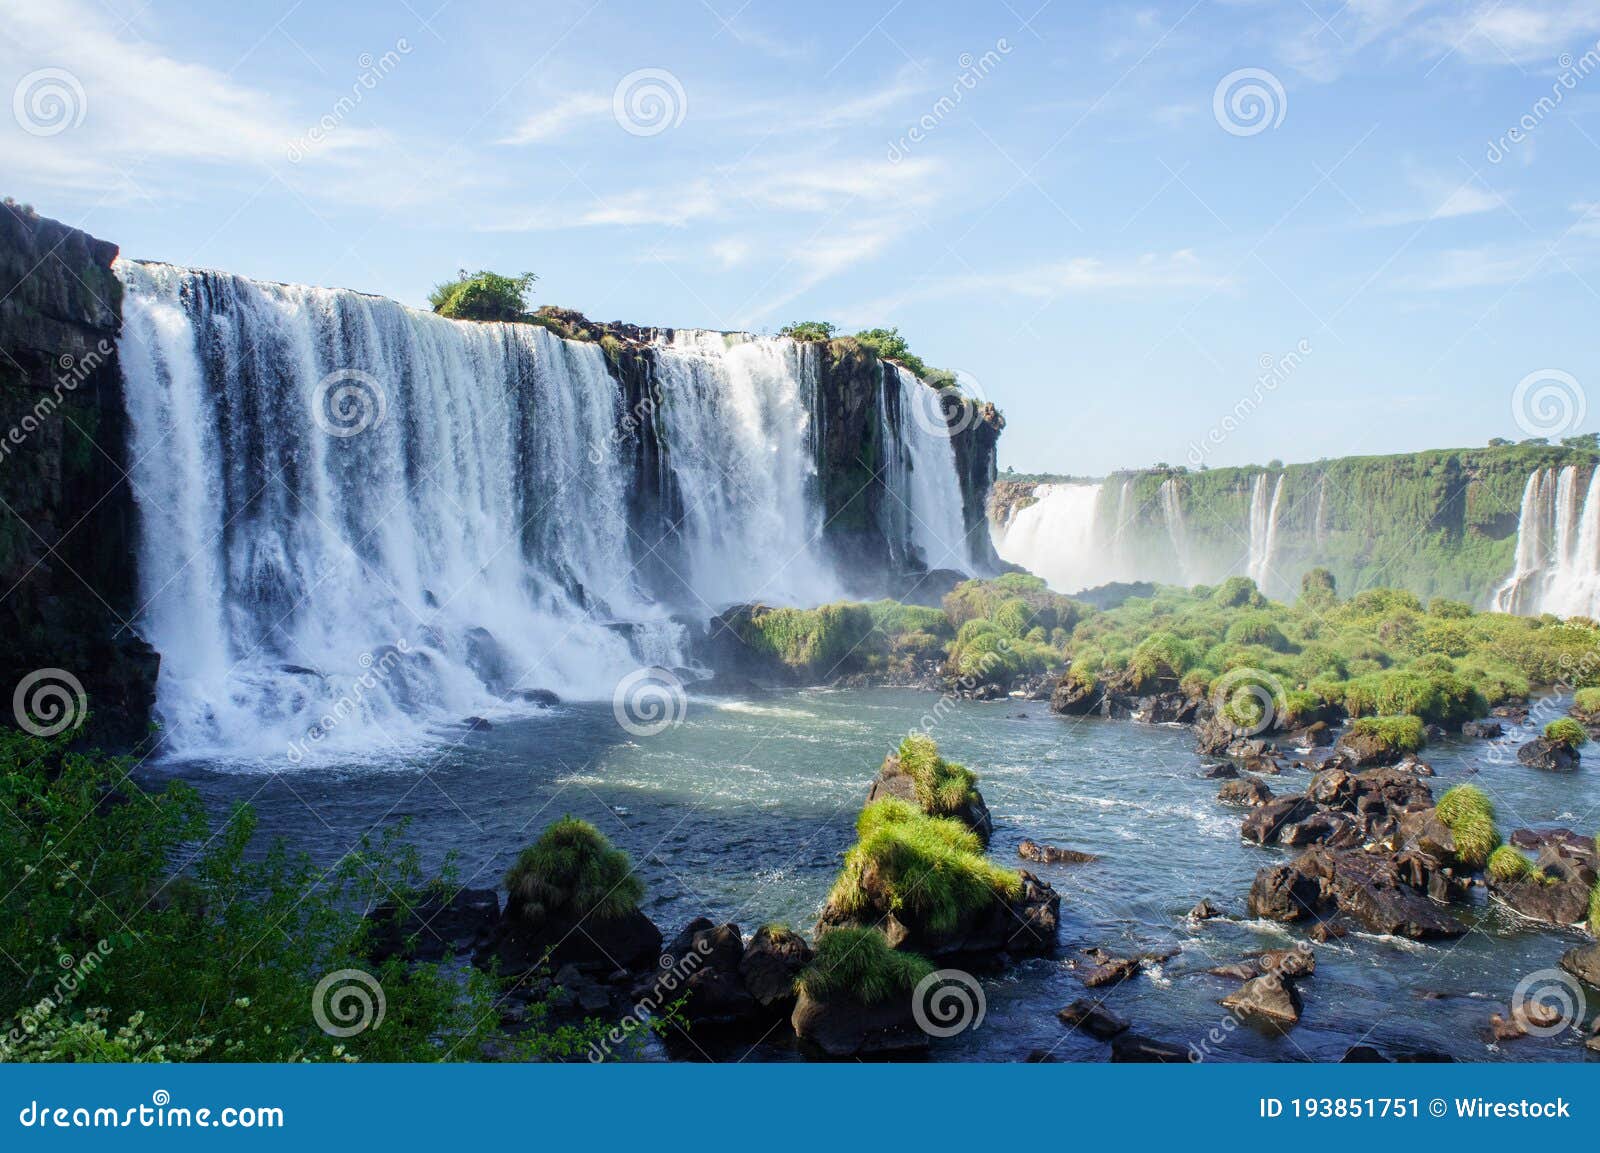 majestic iguazu falls on the border of brazil, argentina, and paraguay